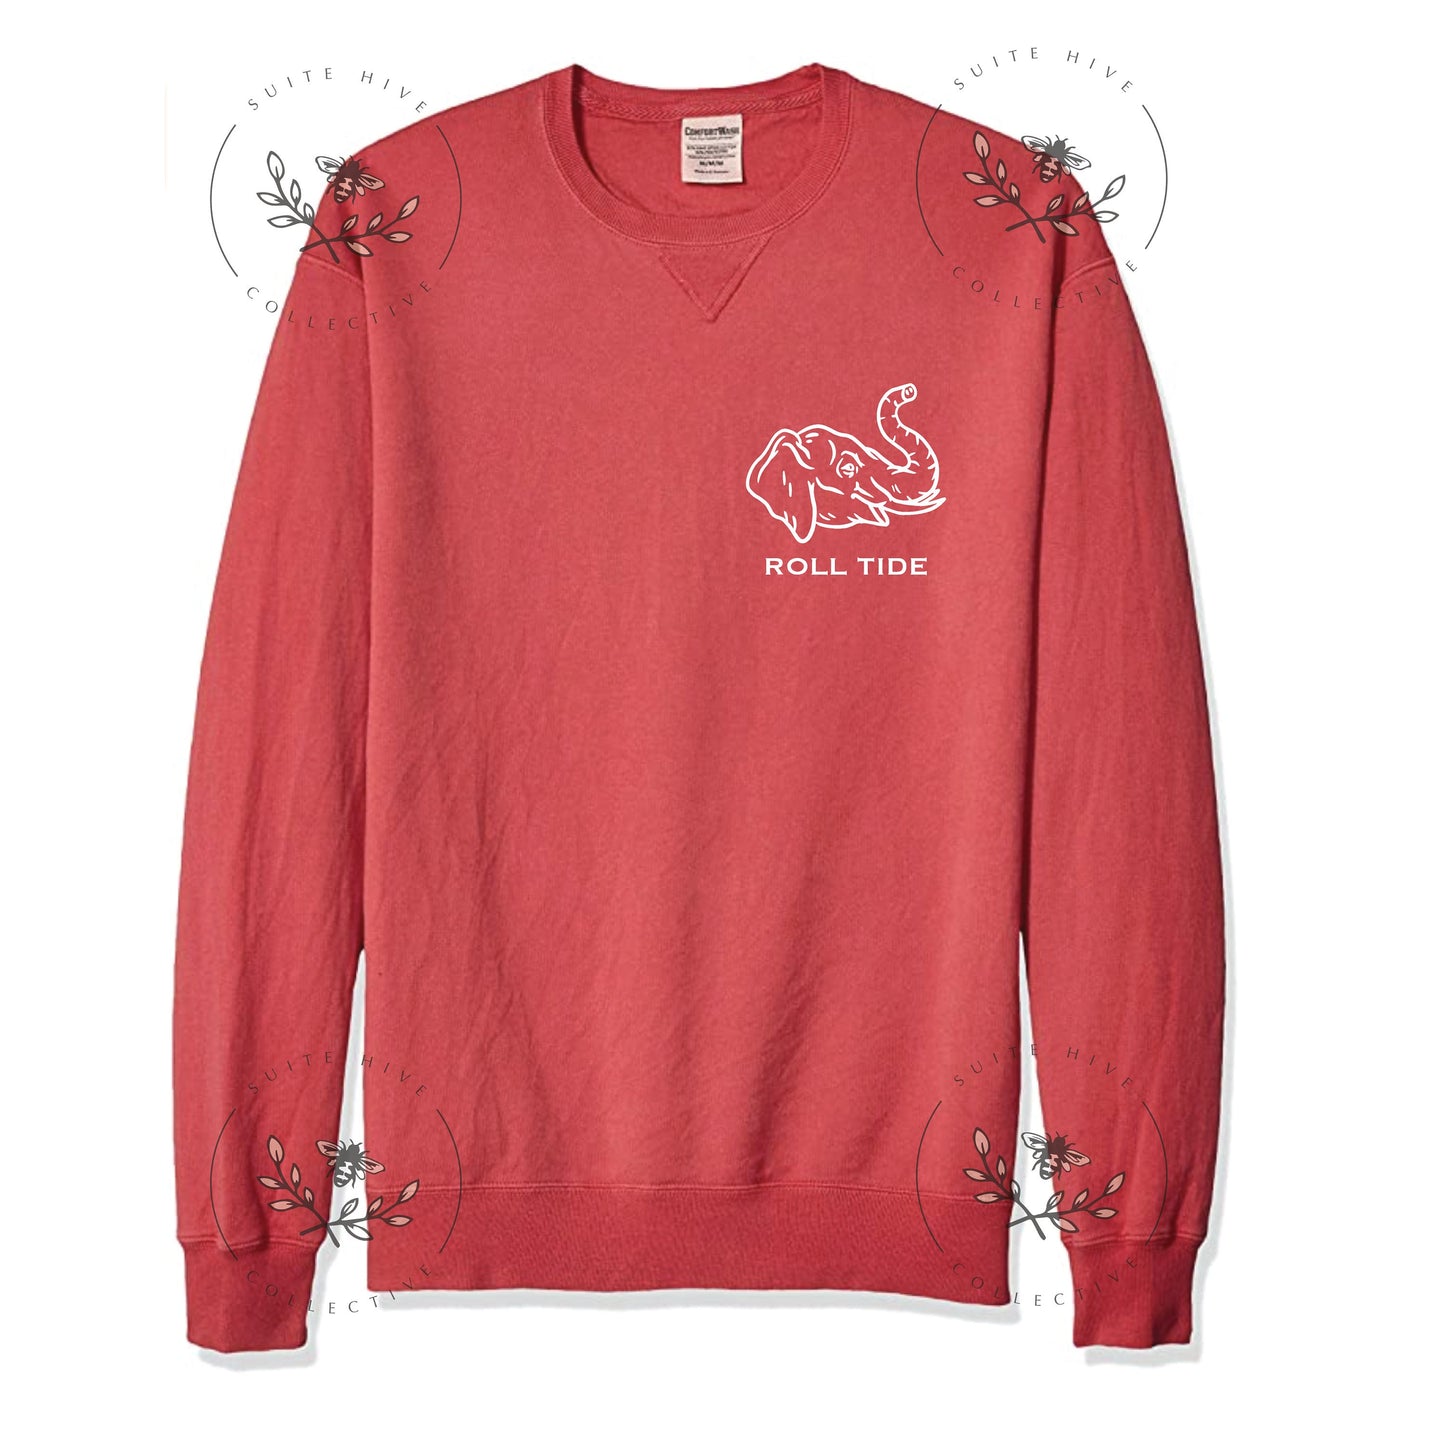 Alabama 'Roll Tide' Game Day Sweatshirt - Super Soft, Unisex